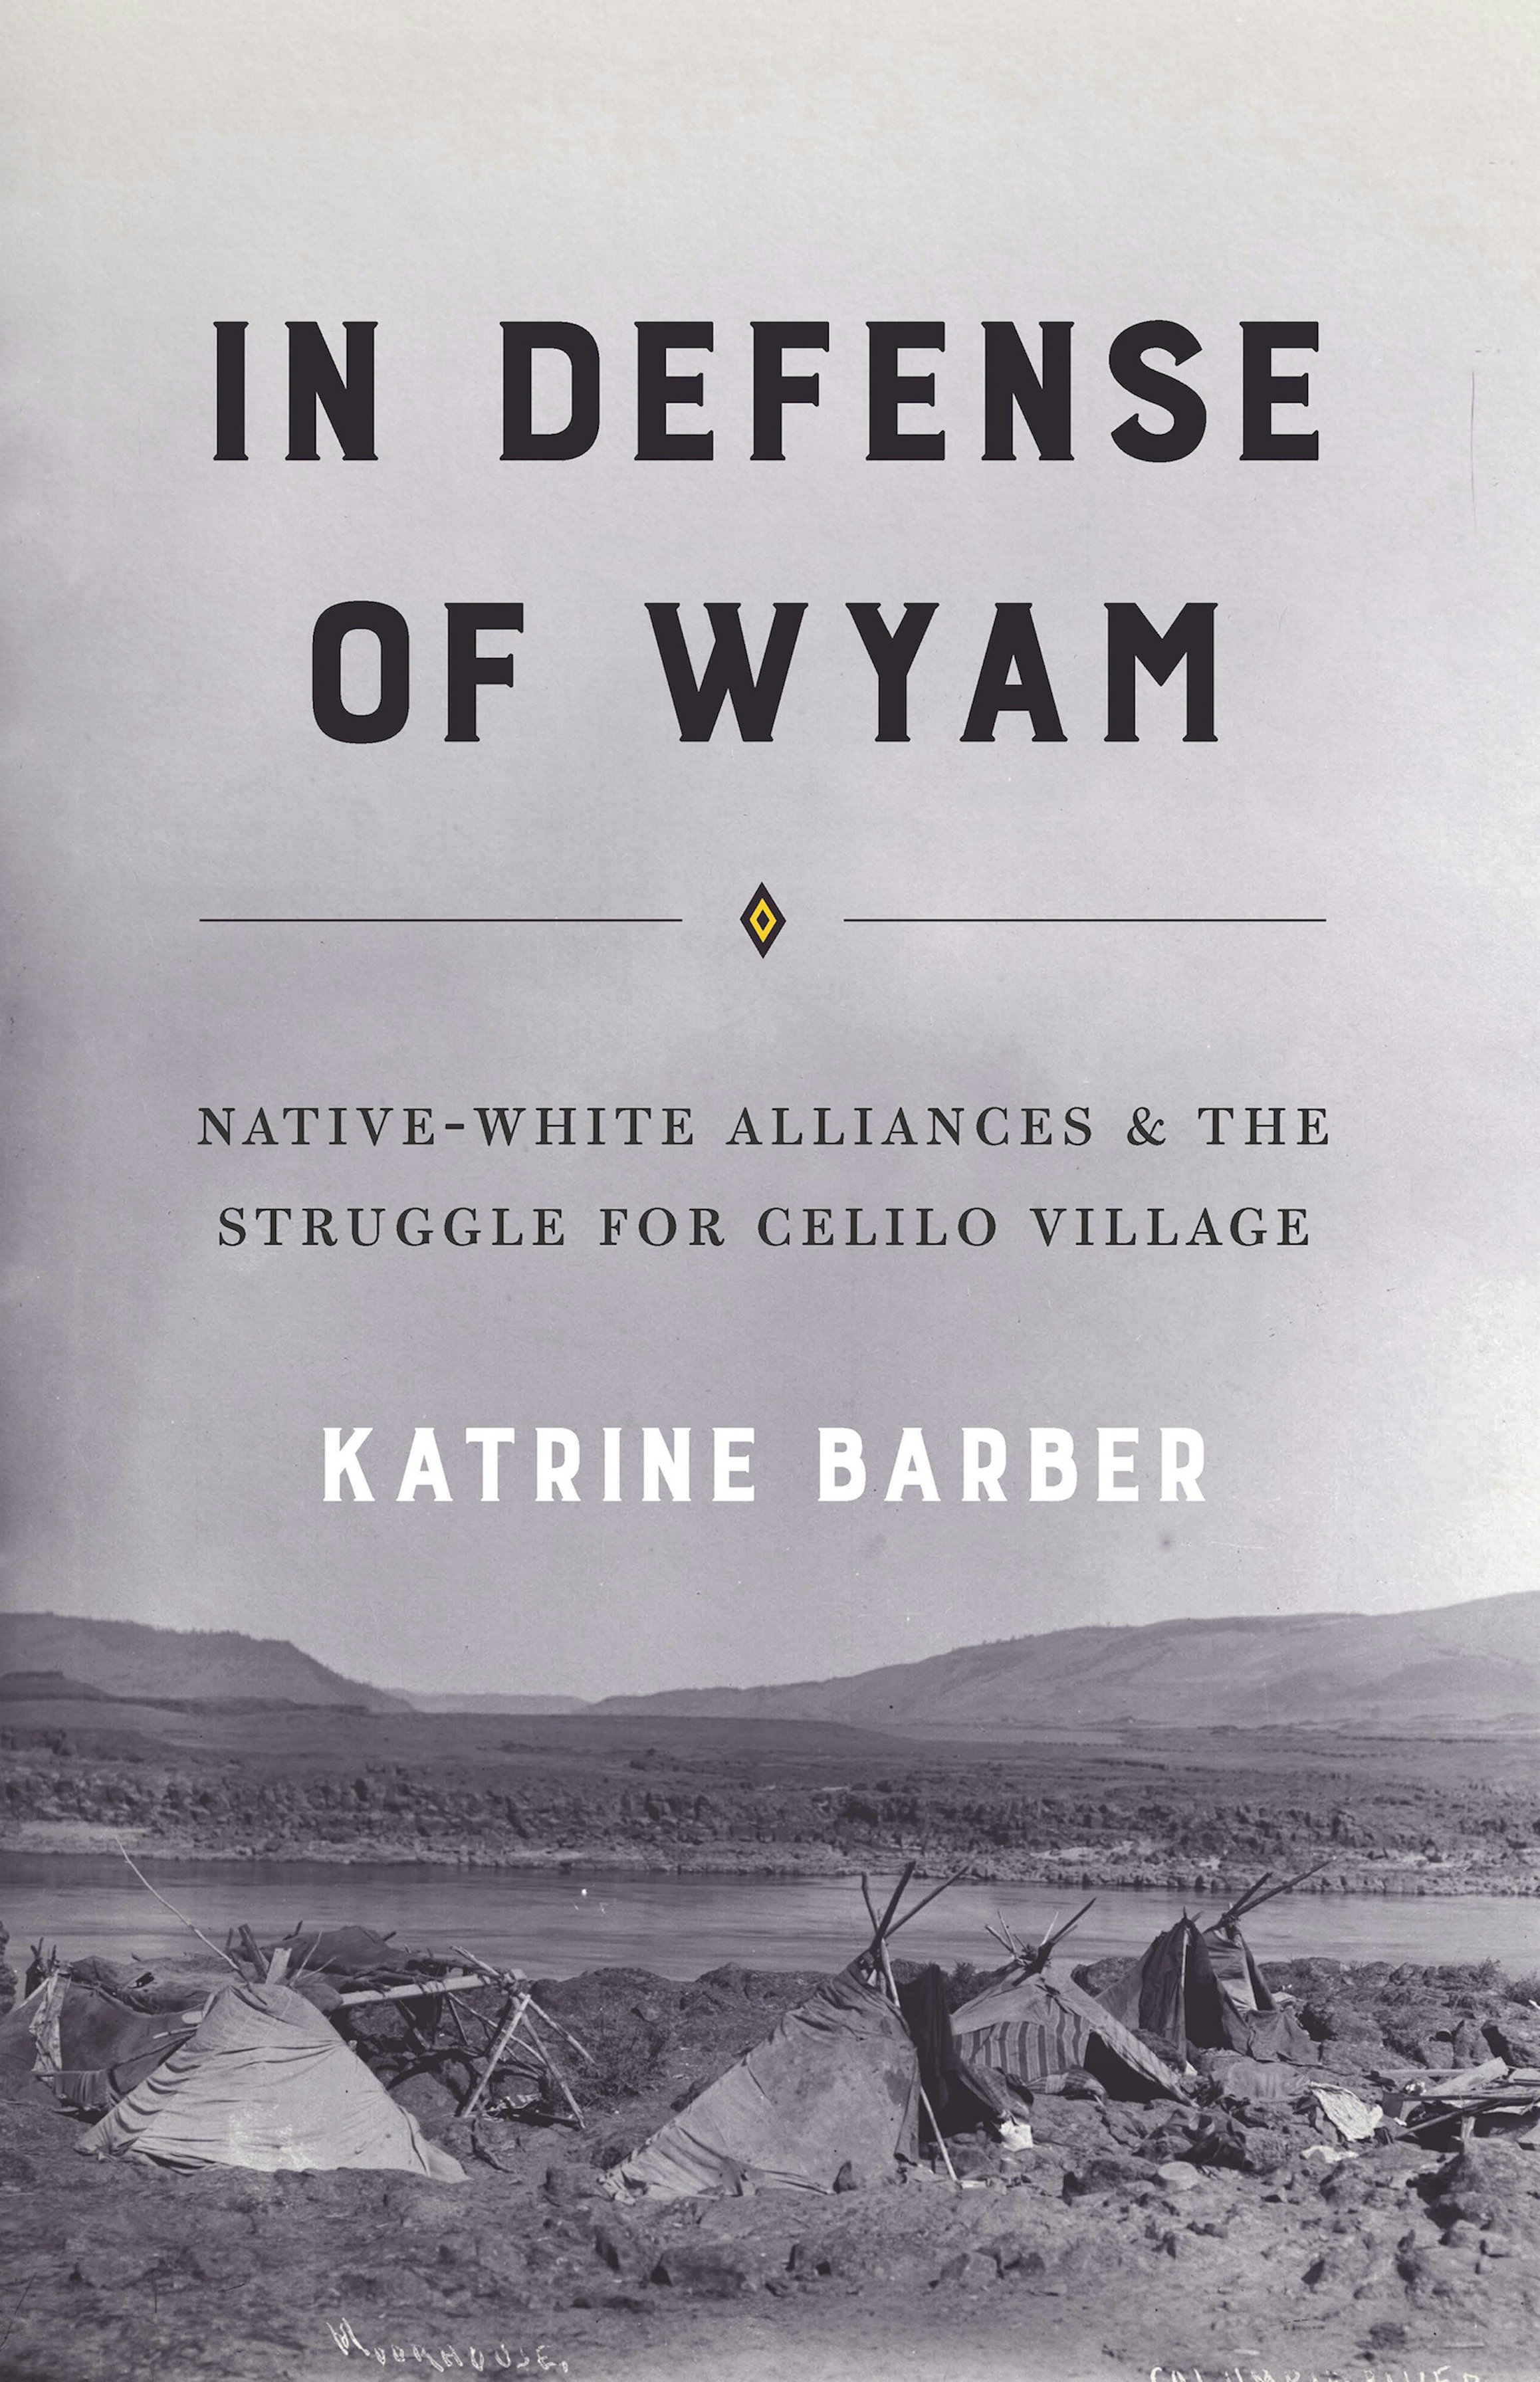 In Defense of Wyam